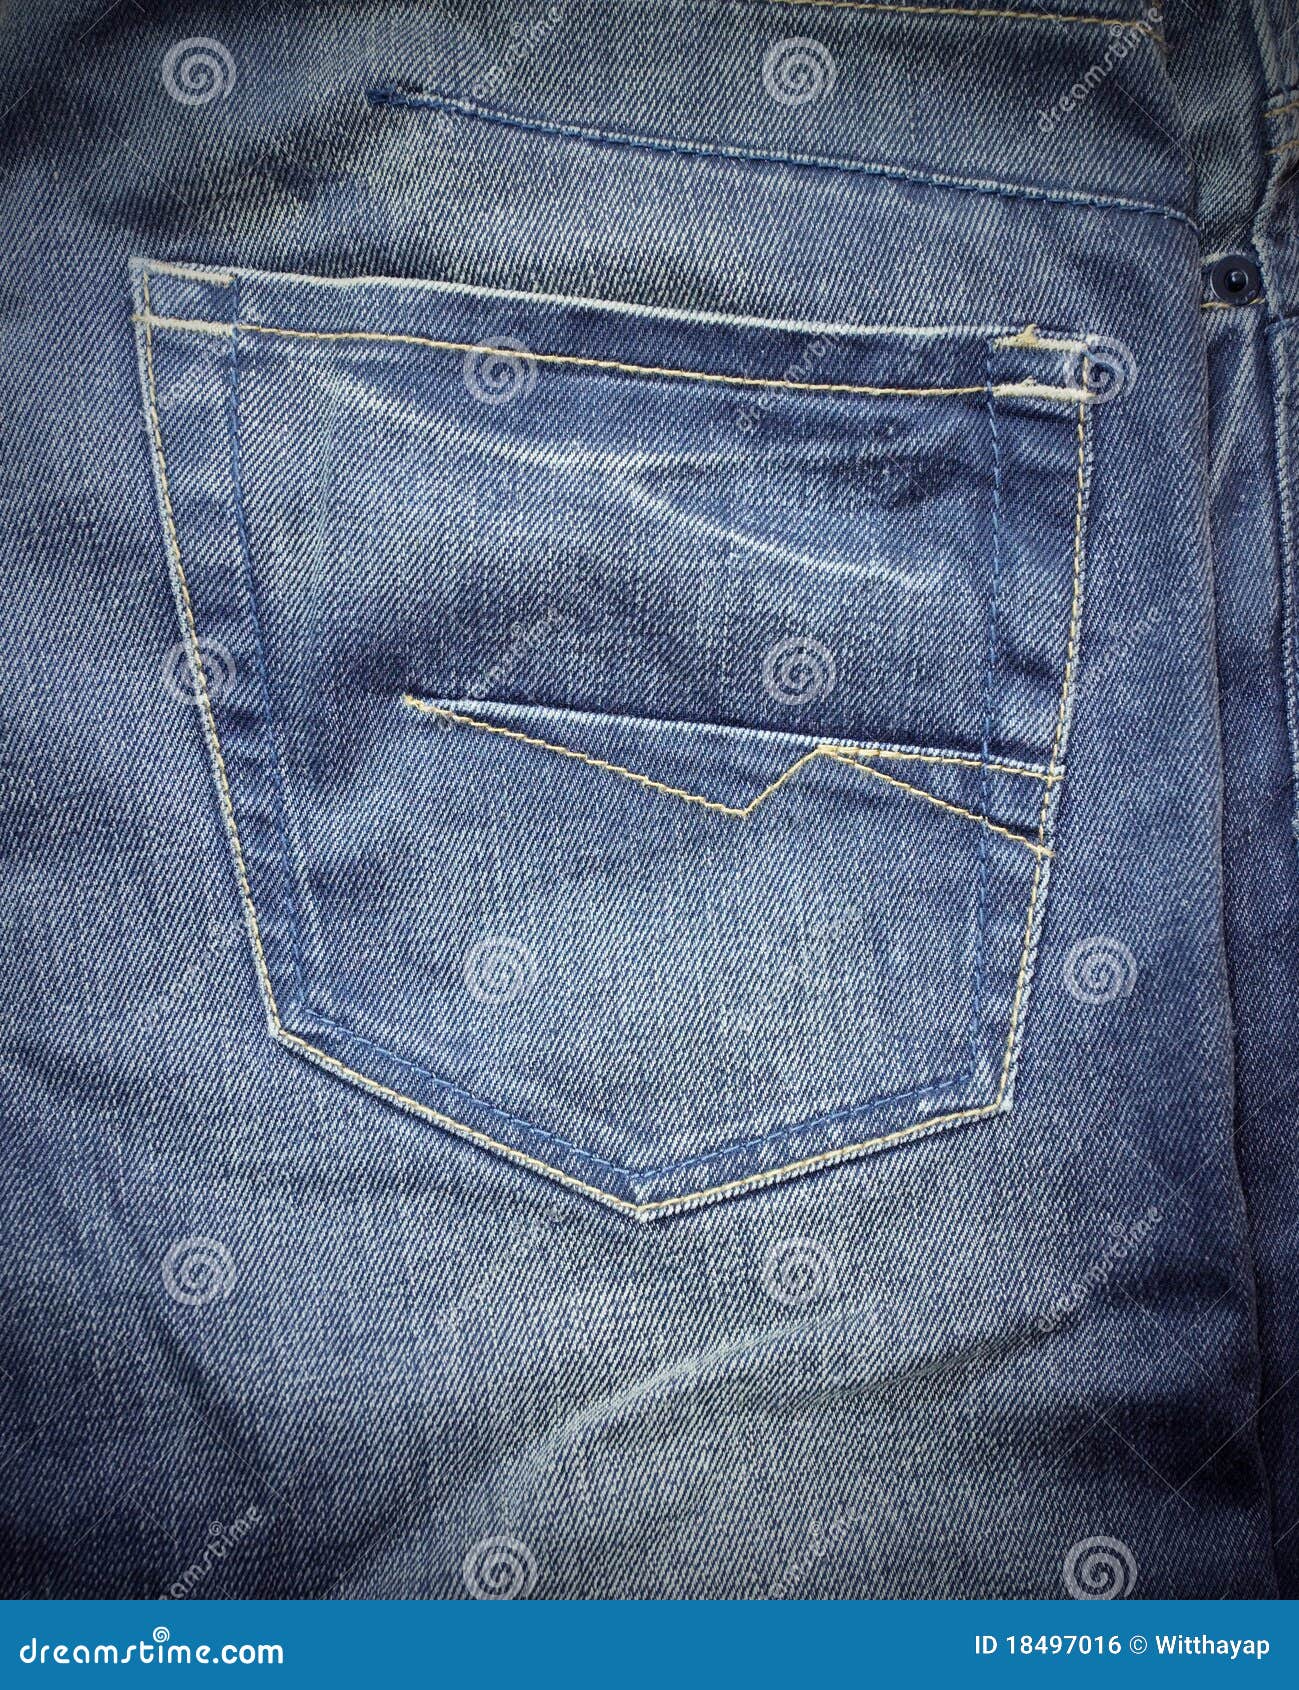 Jeans Back Pocket Royalty Free Stock Image - Image: 18497016